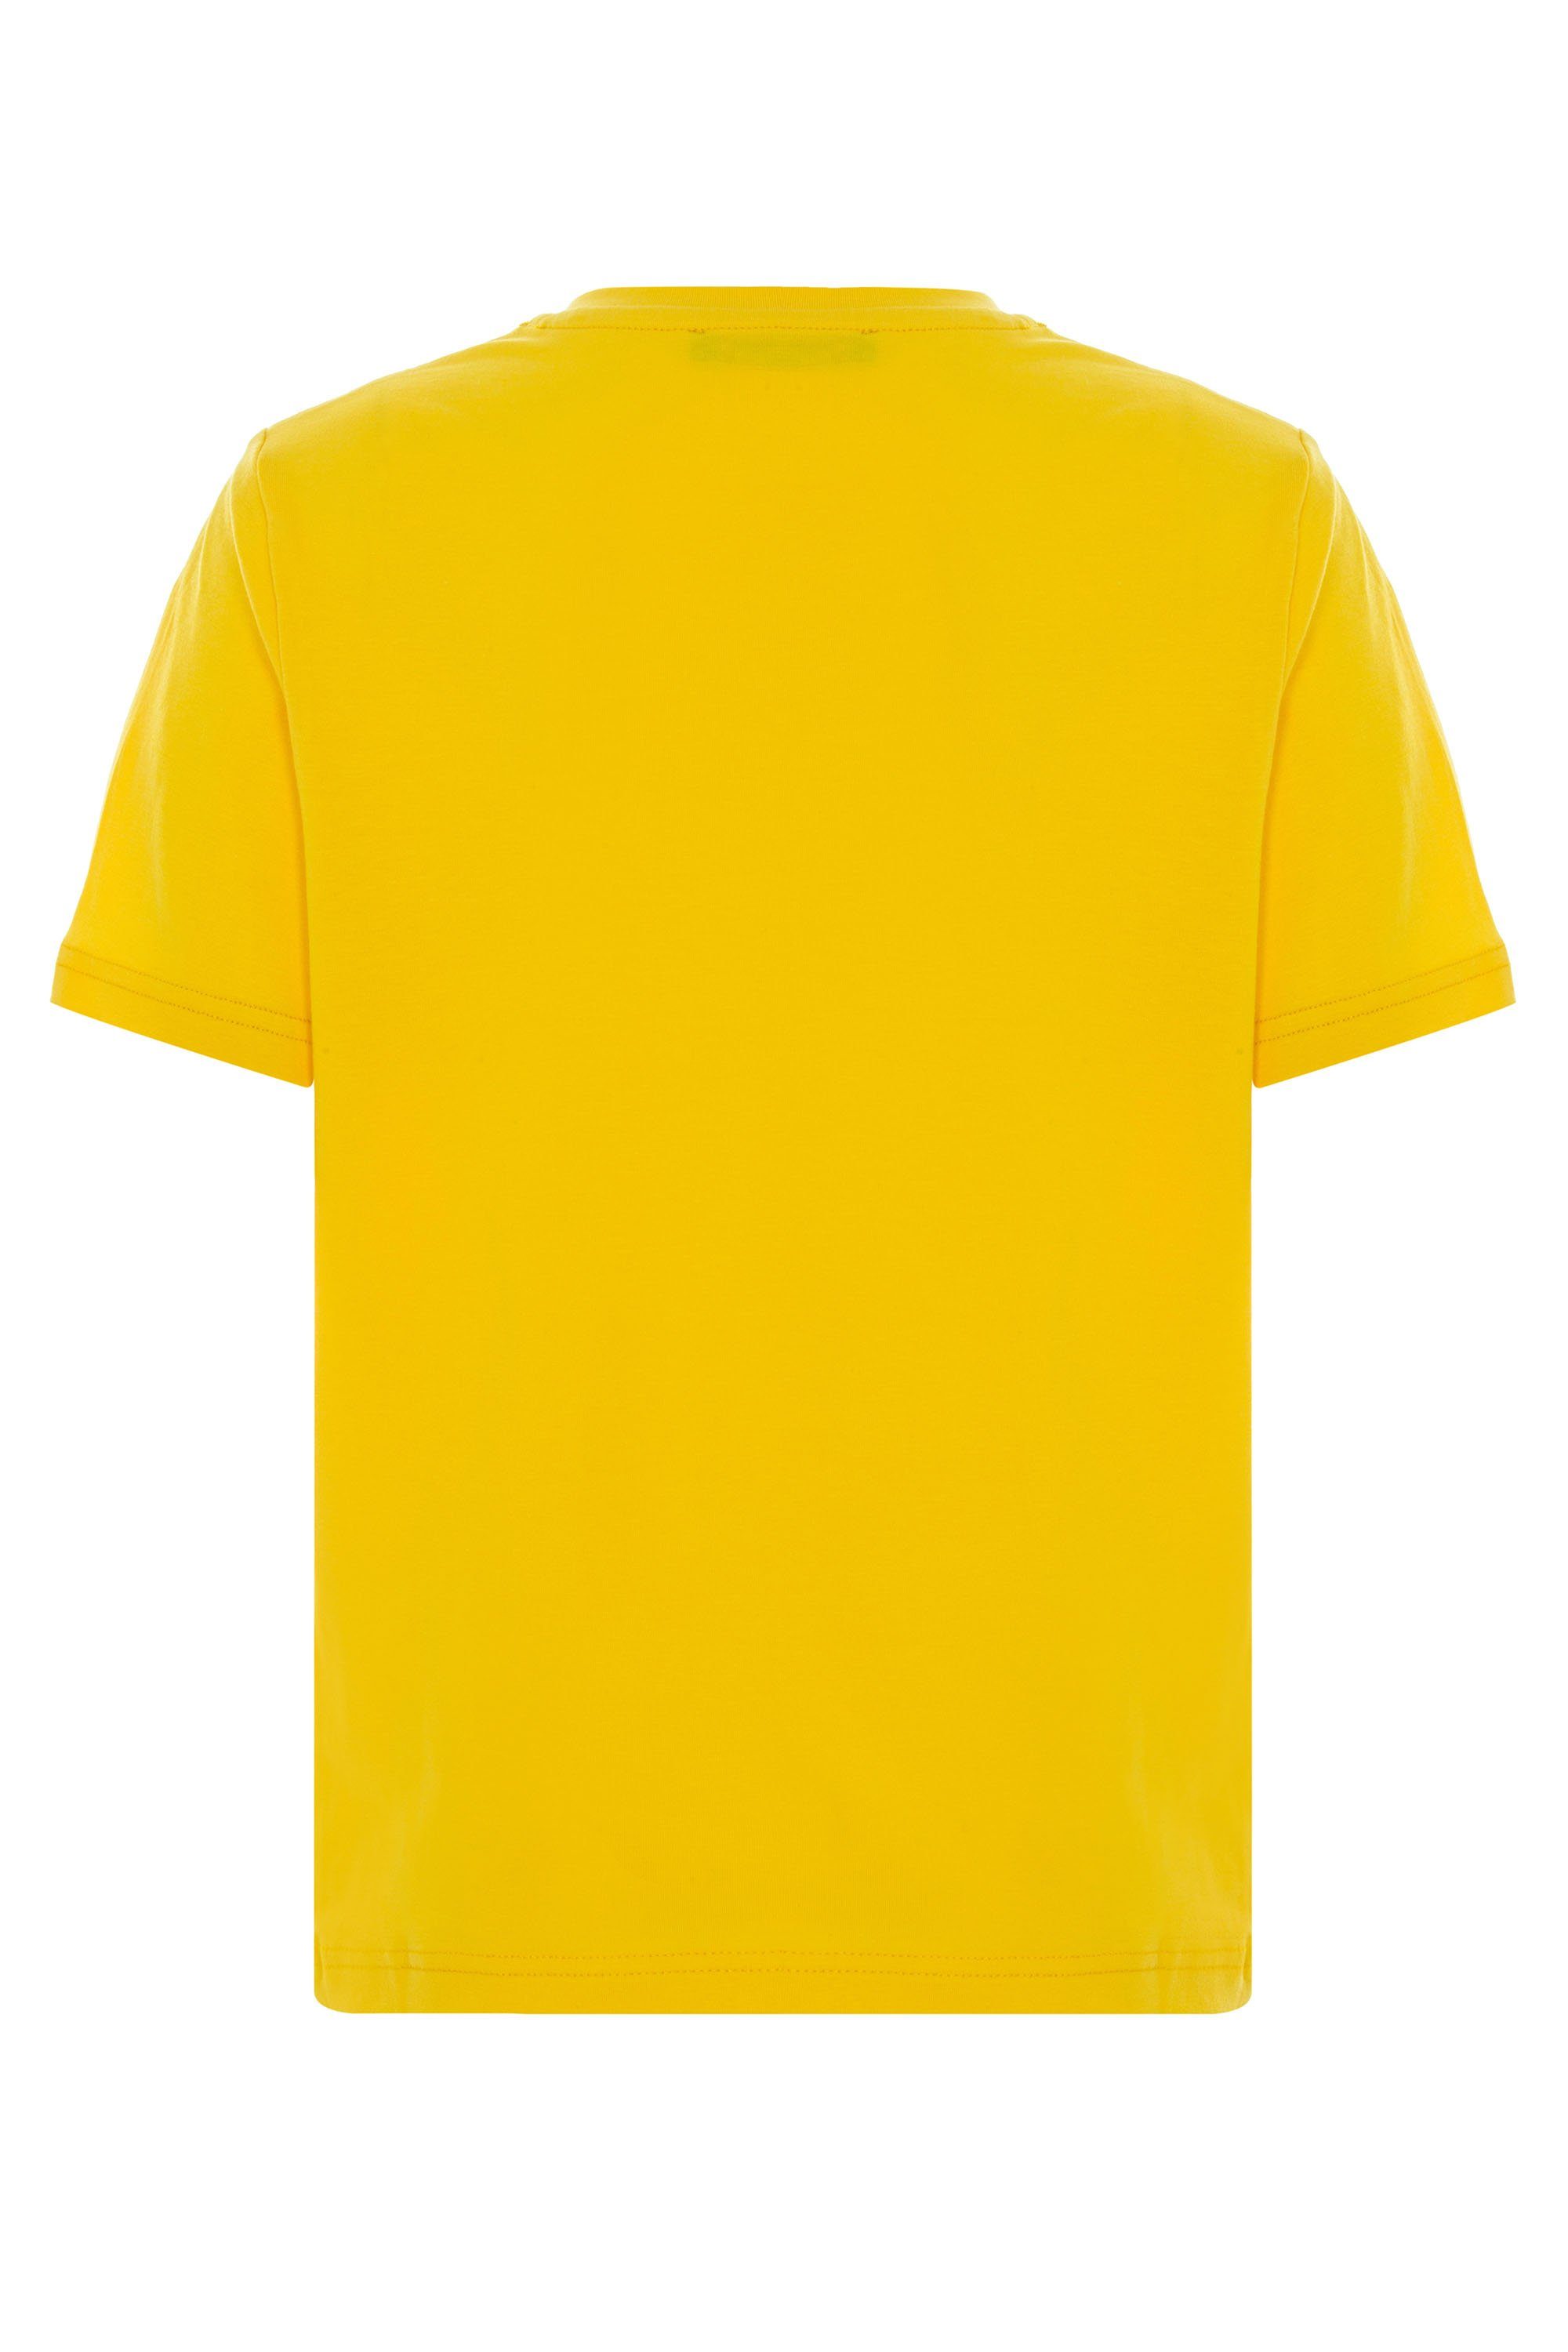 & Cipo T-Shirt Print Baxx coolem mit gelb-schwarz